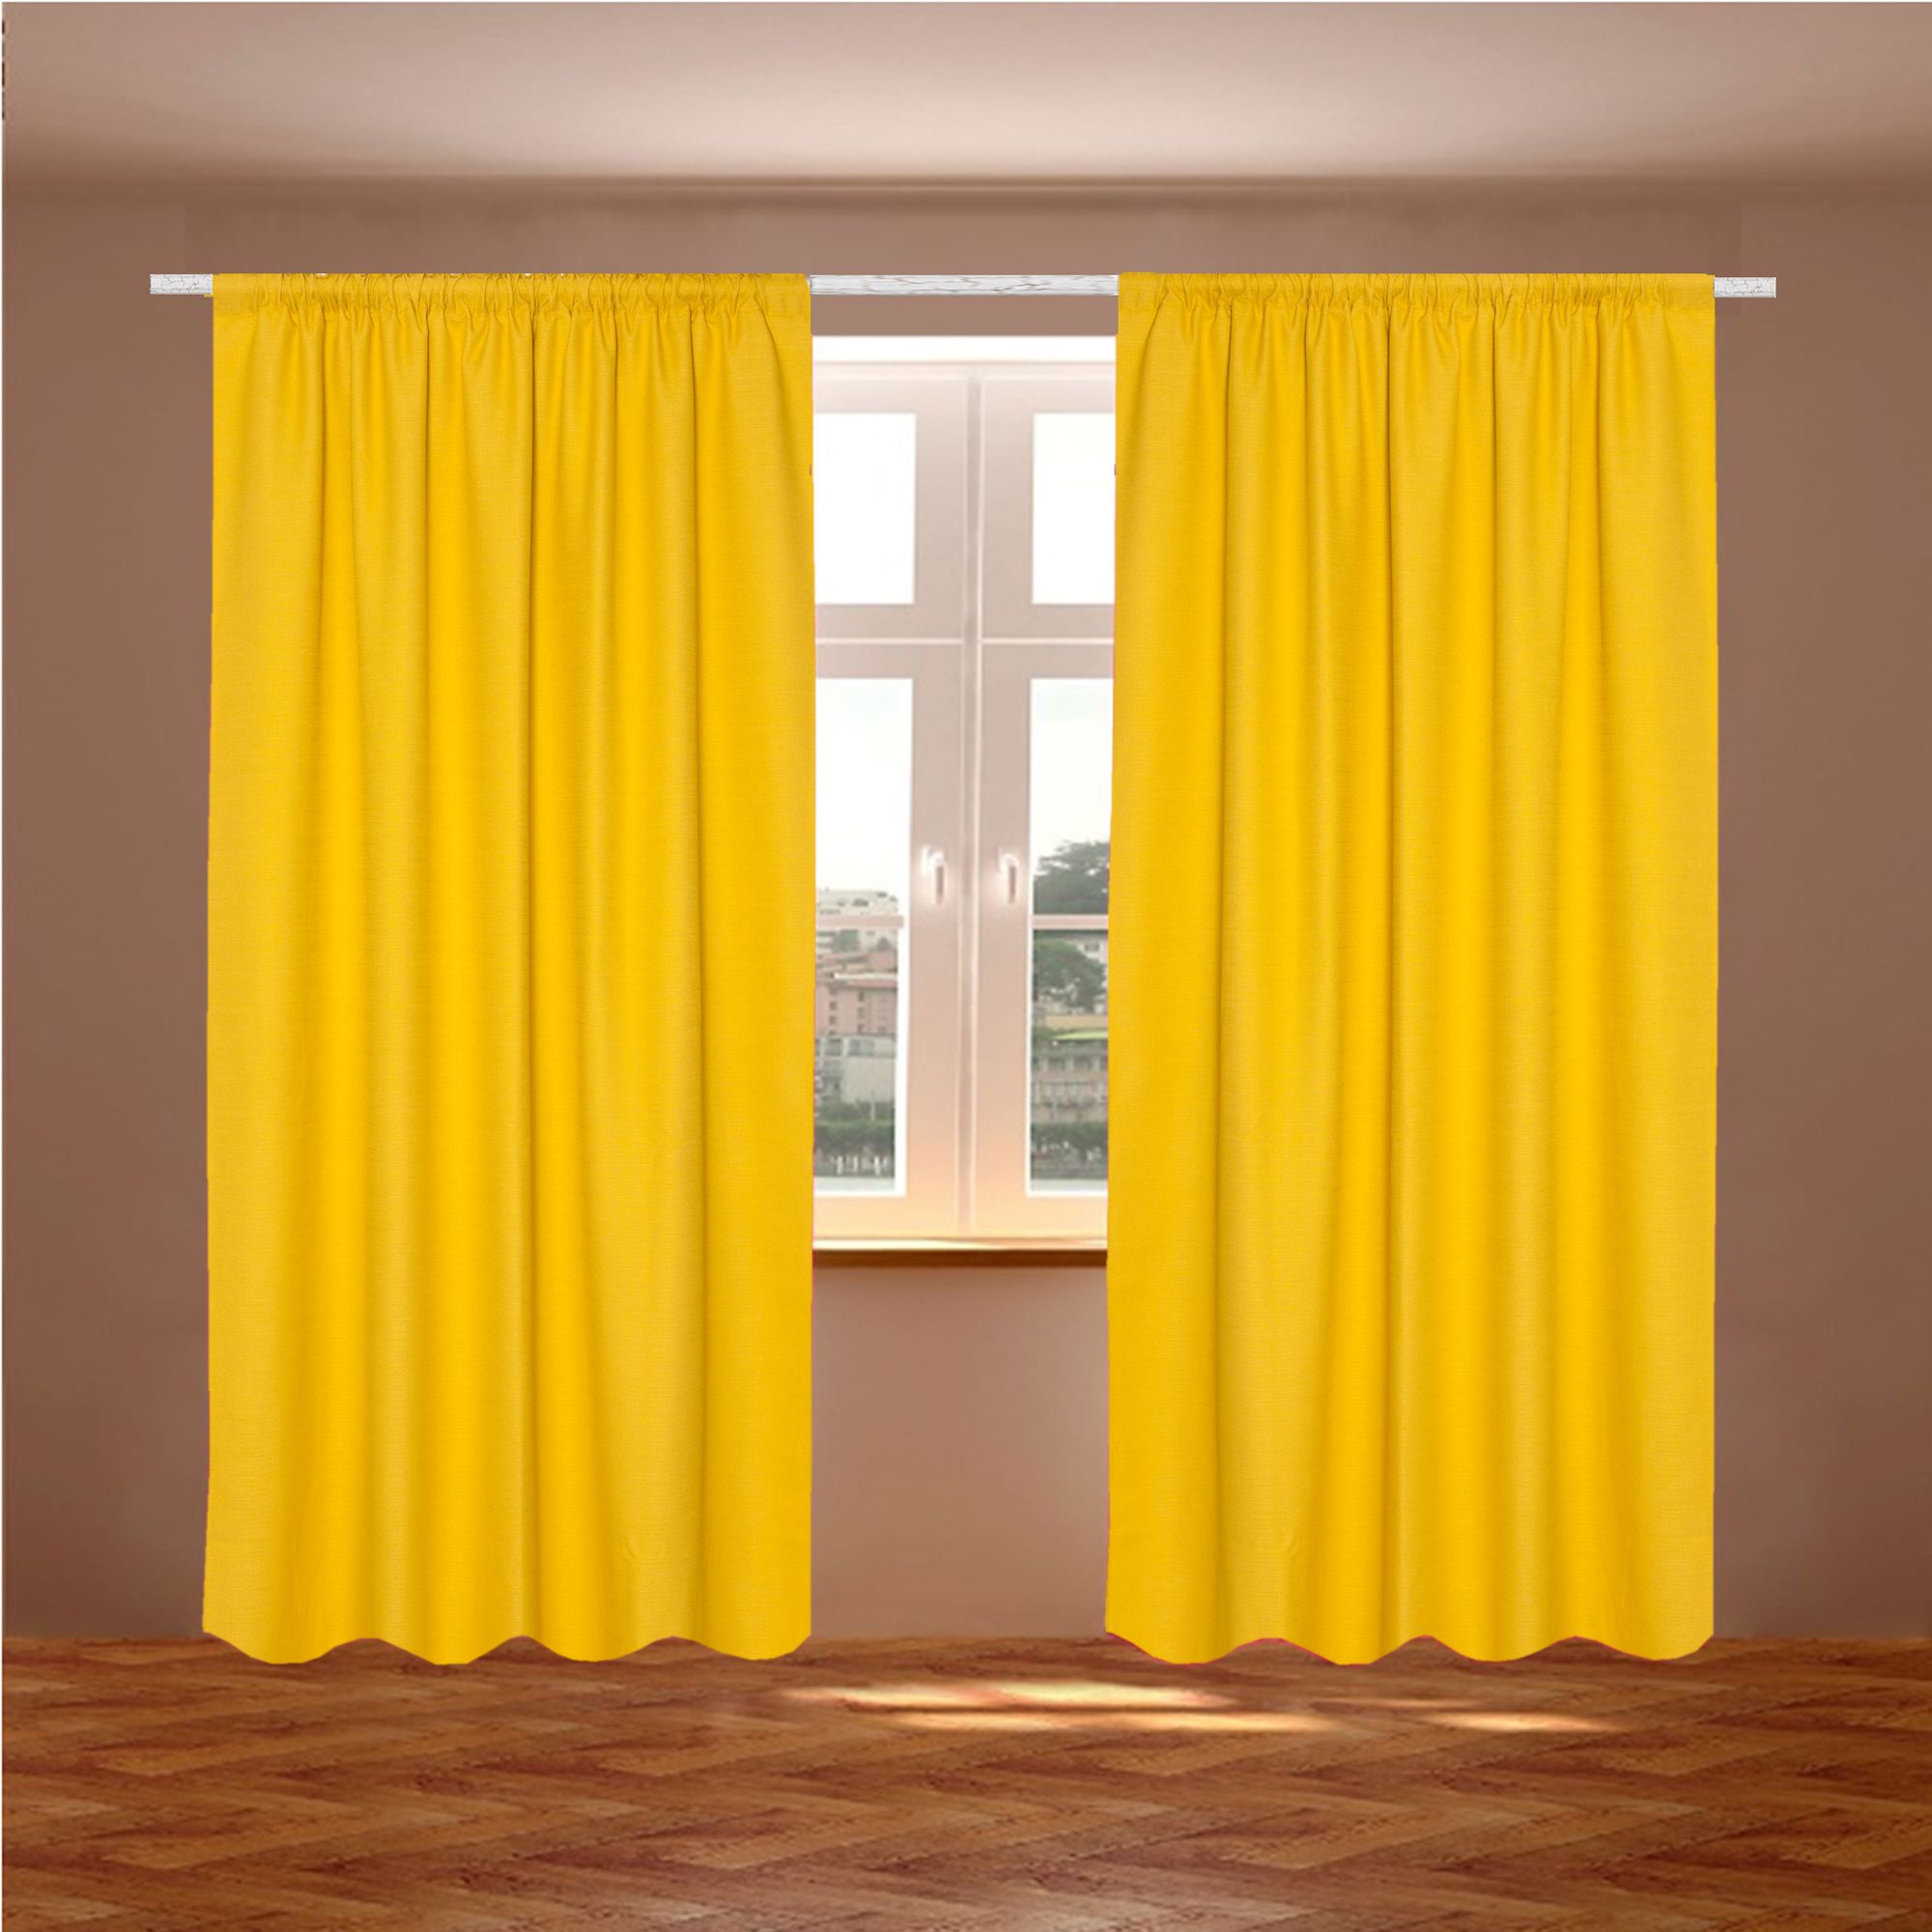 Готовые желтые шторы